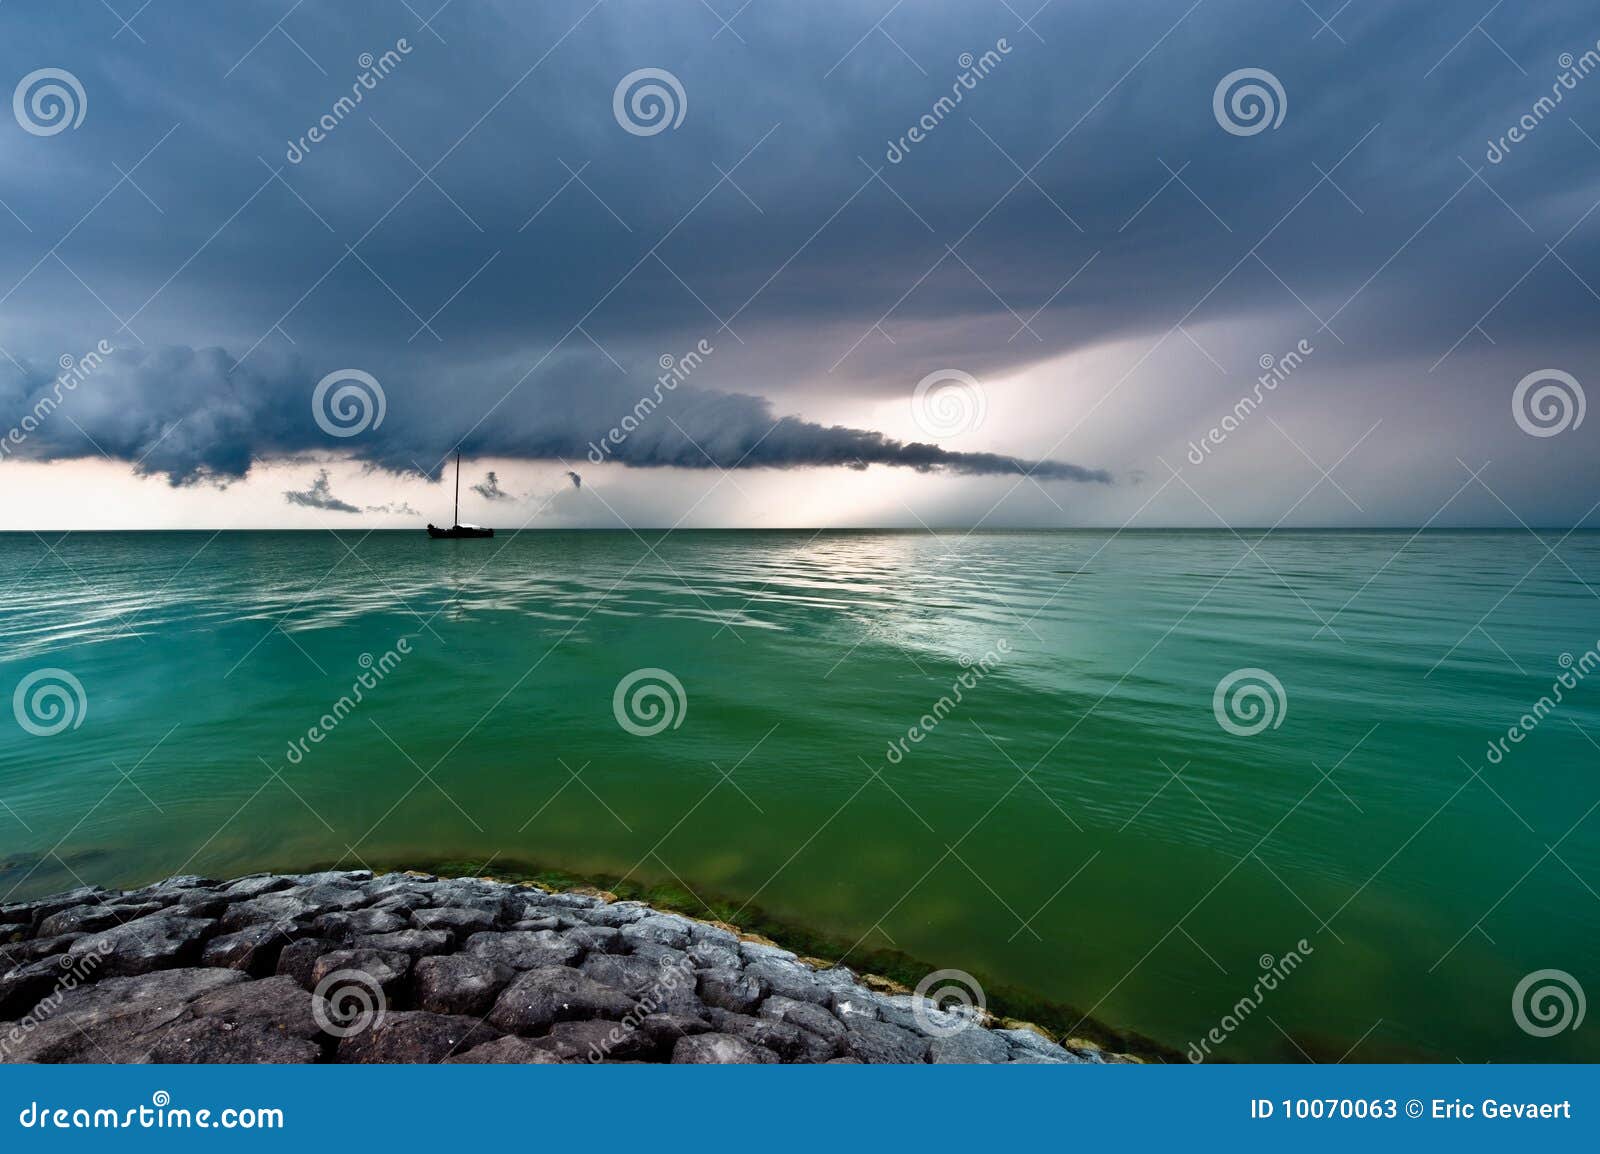 a storm cloud approaching on the ijsselmeer